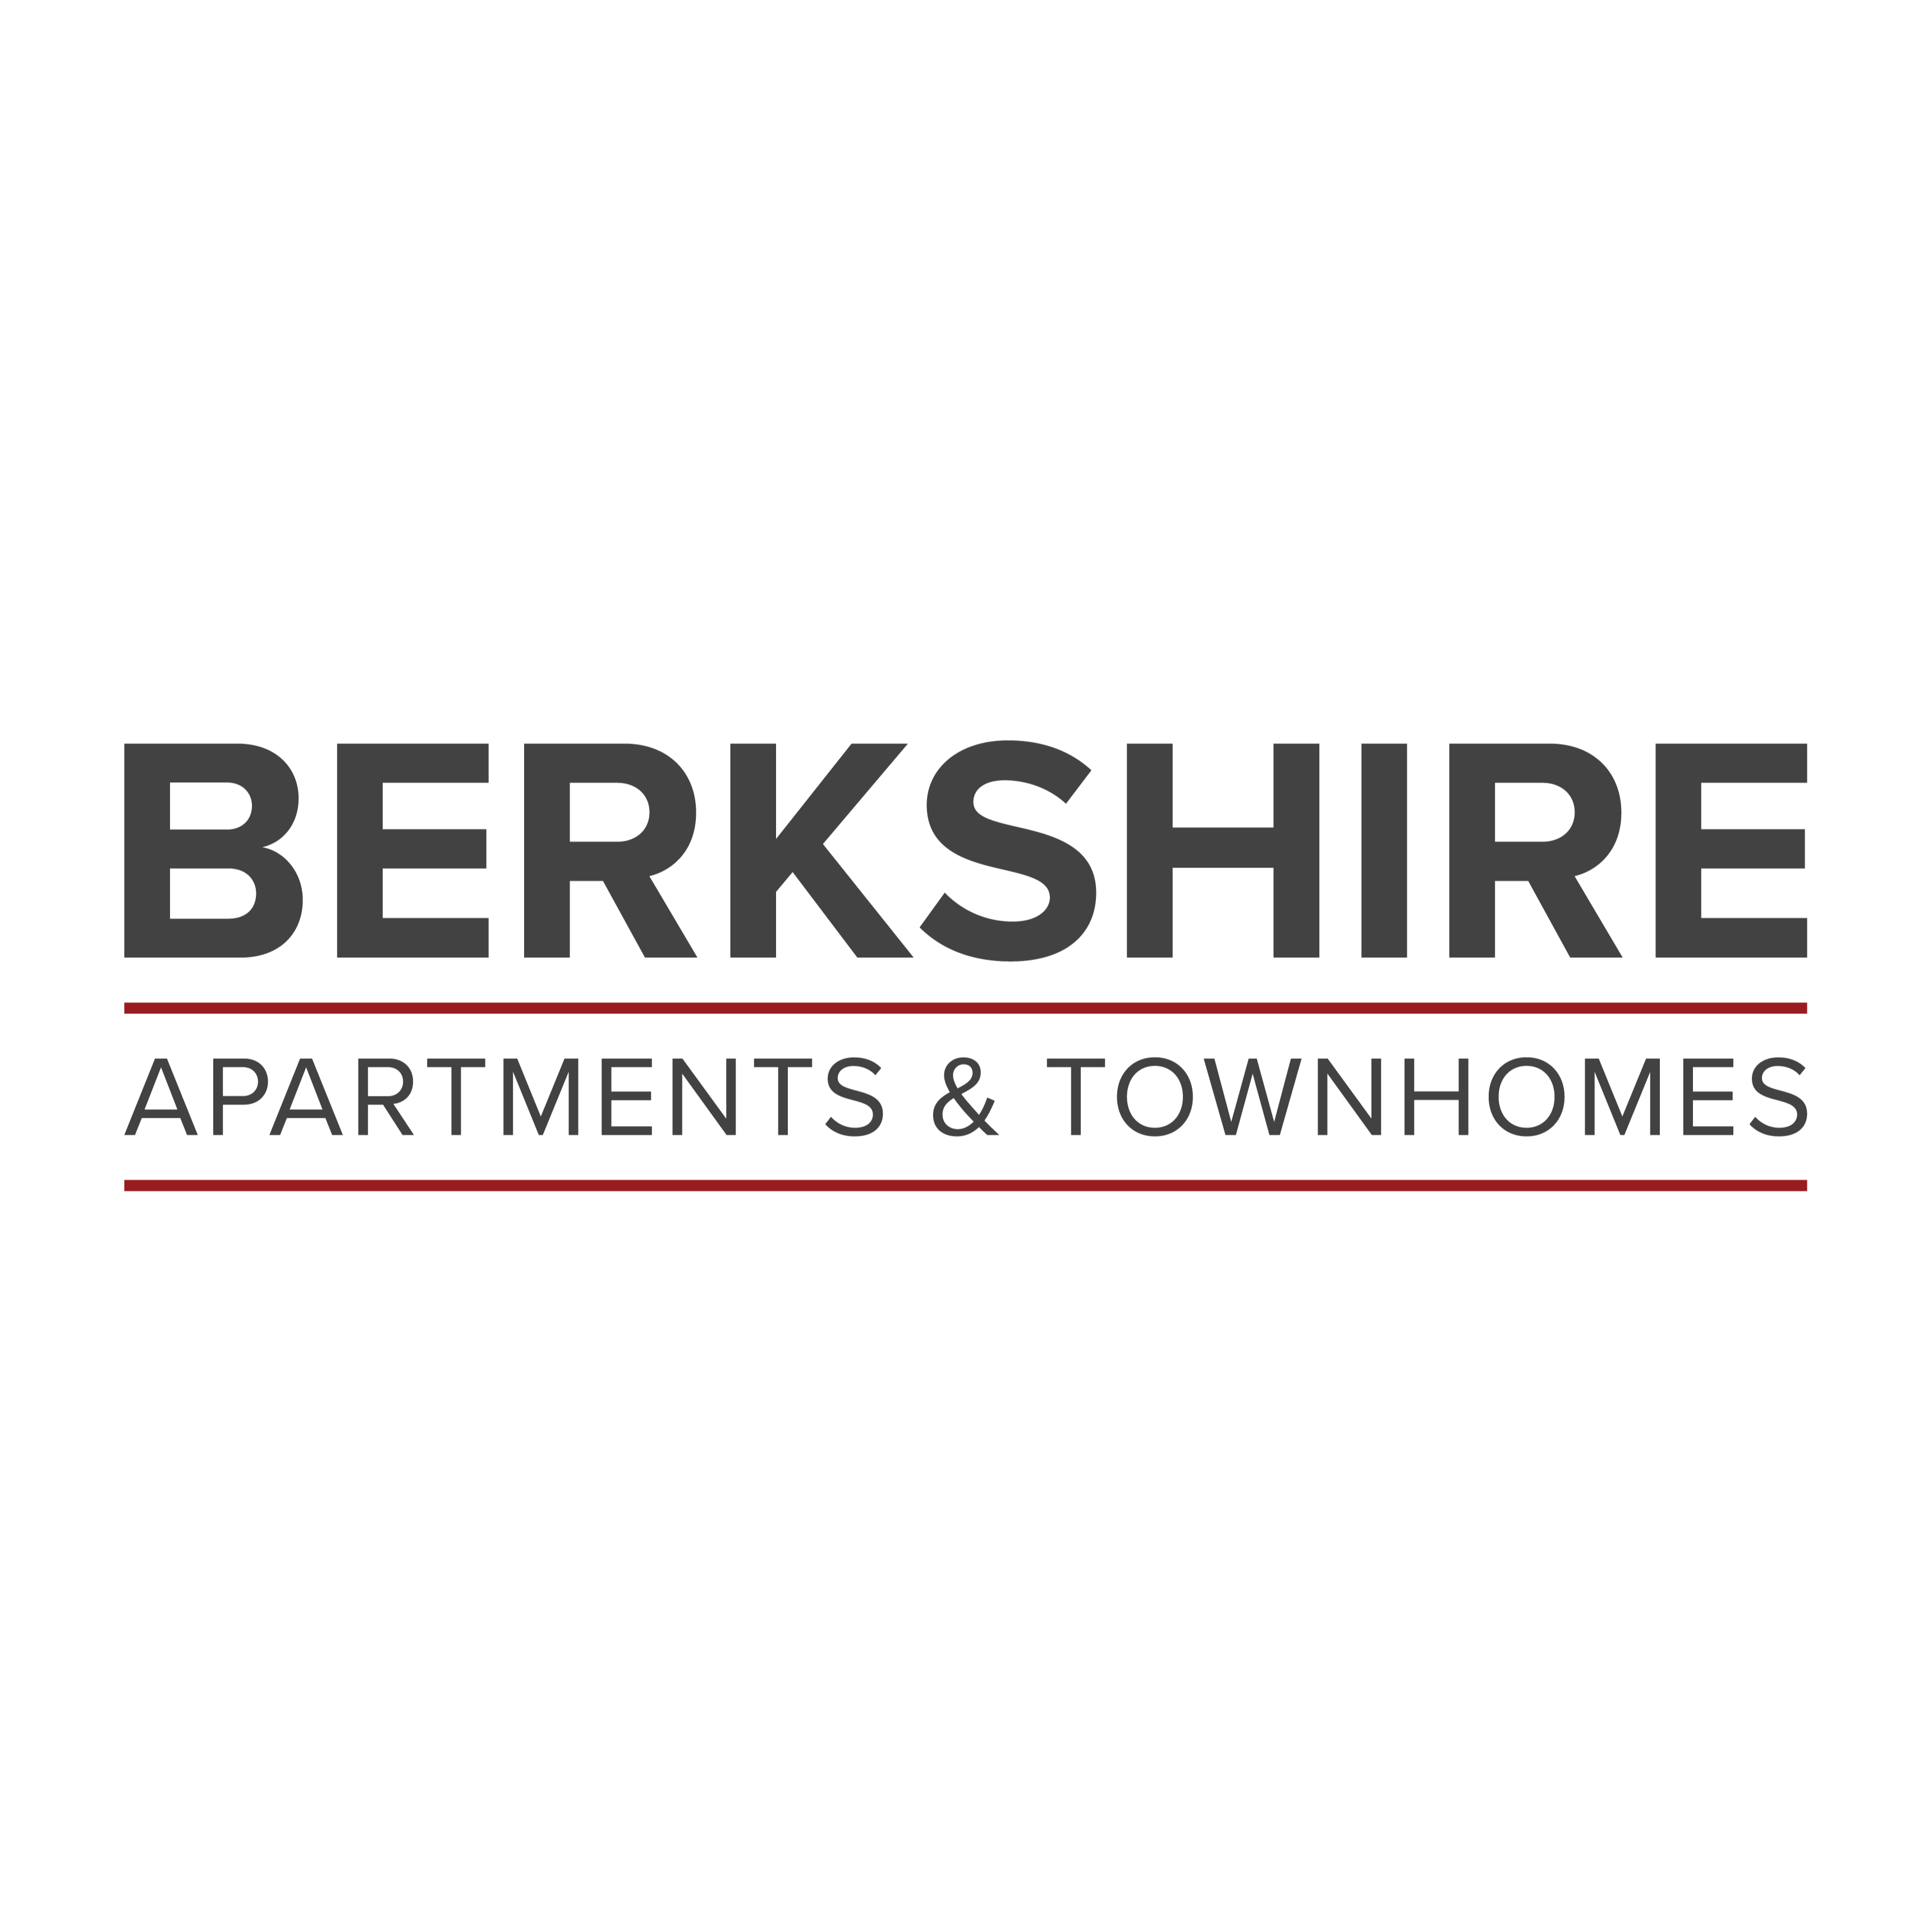 Berkshire Apartments and Townhomes - Wichita, KS 67212 - (316)669-5264 | ShowMeLocal.com